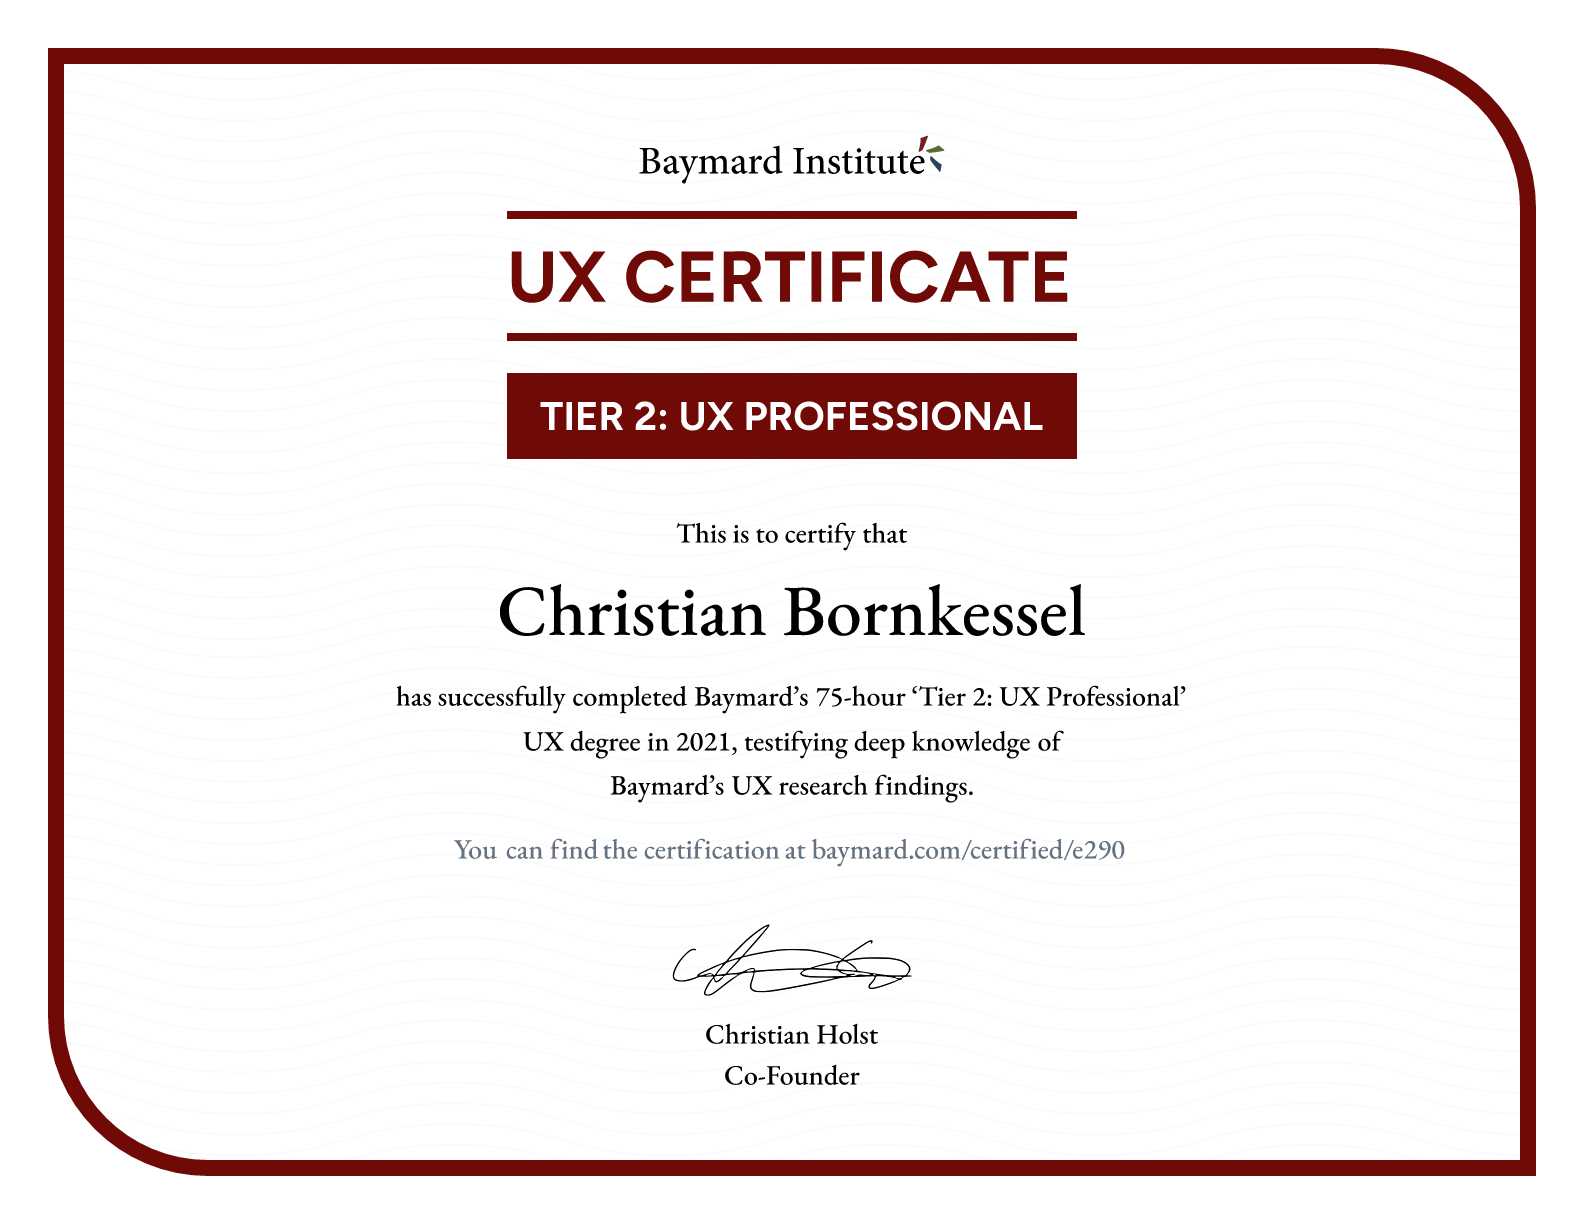 Christian Bornkessel’s certificate